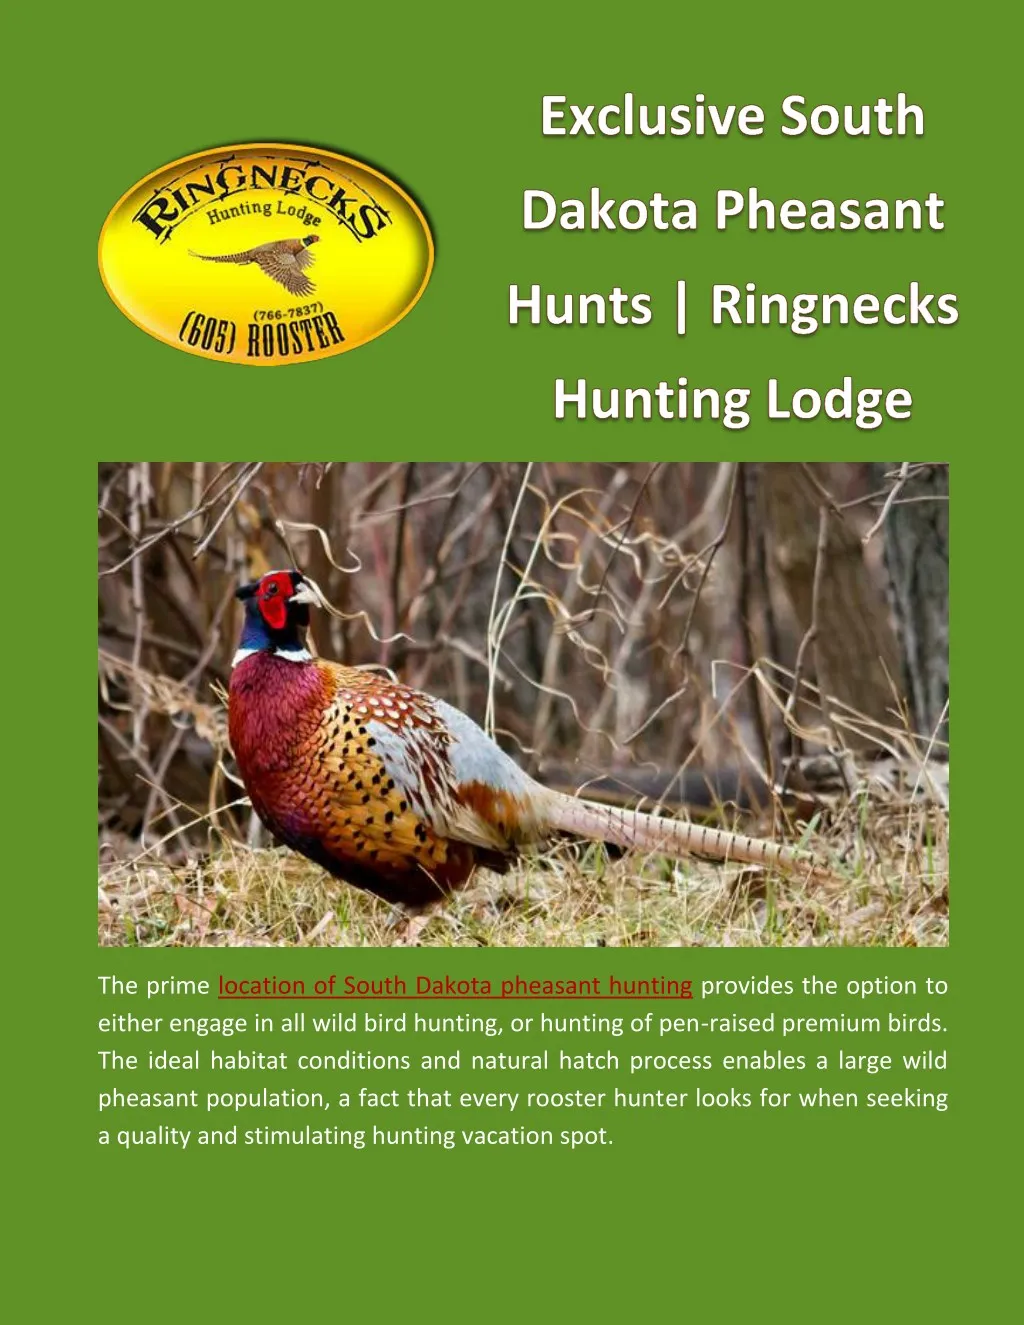 the prime location of south dakota pheasant